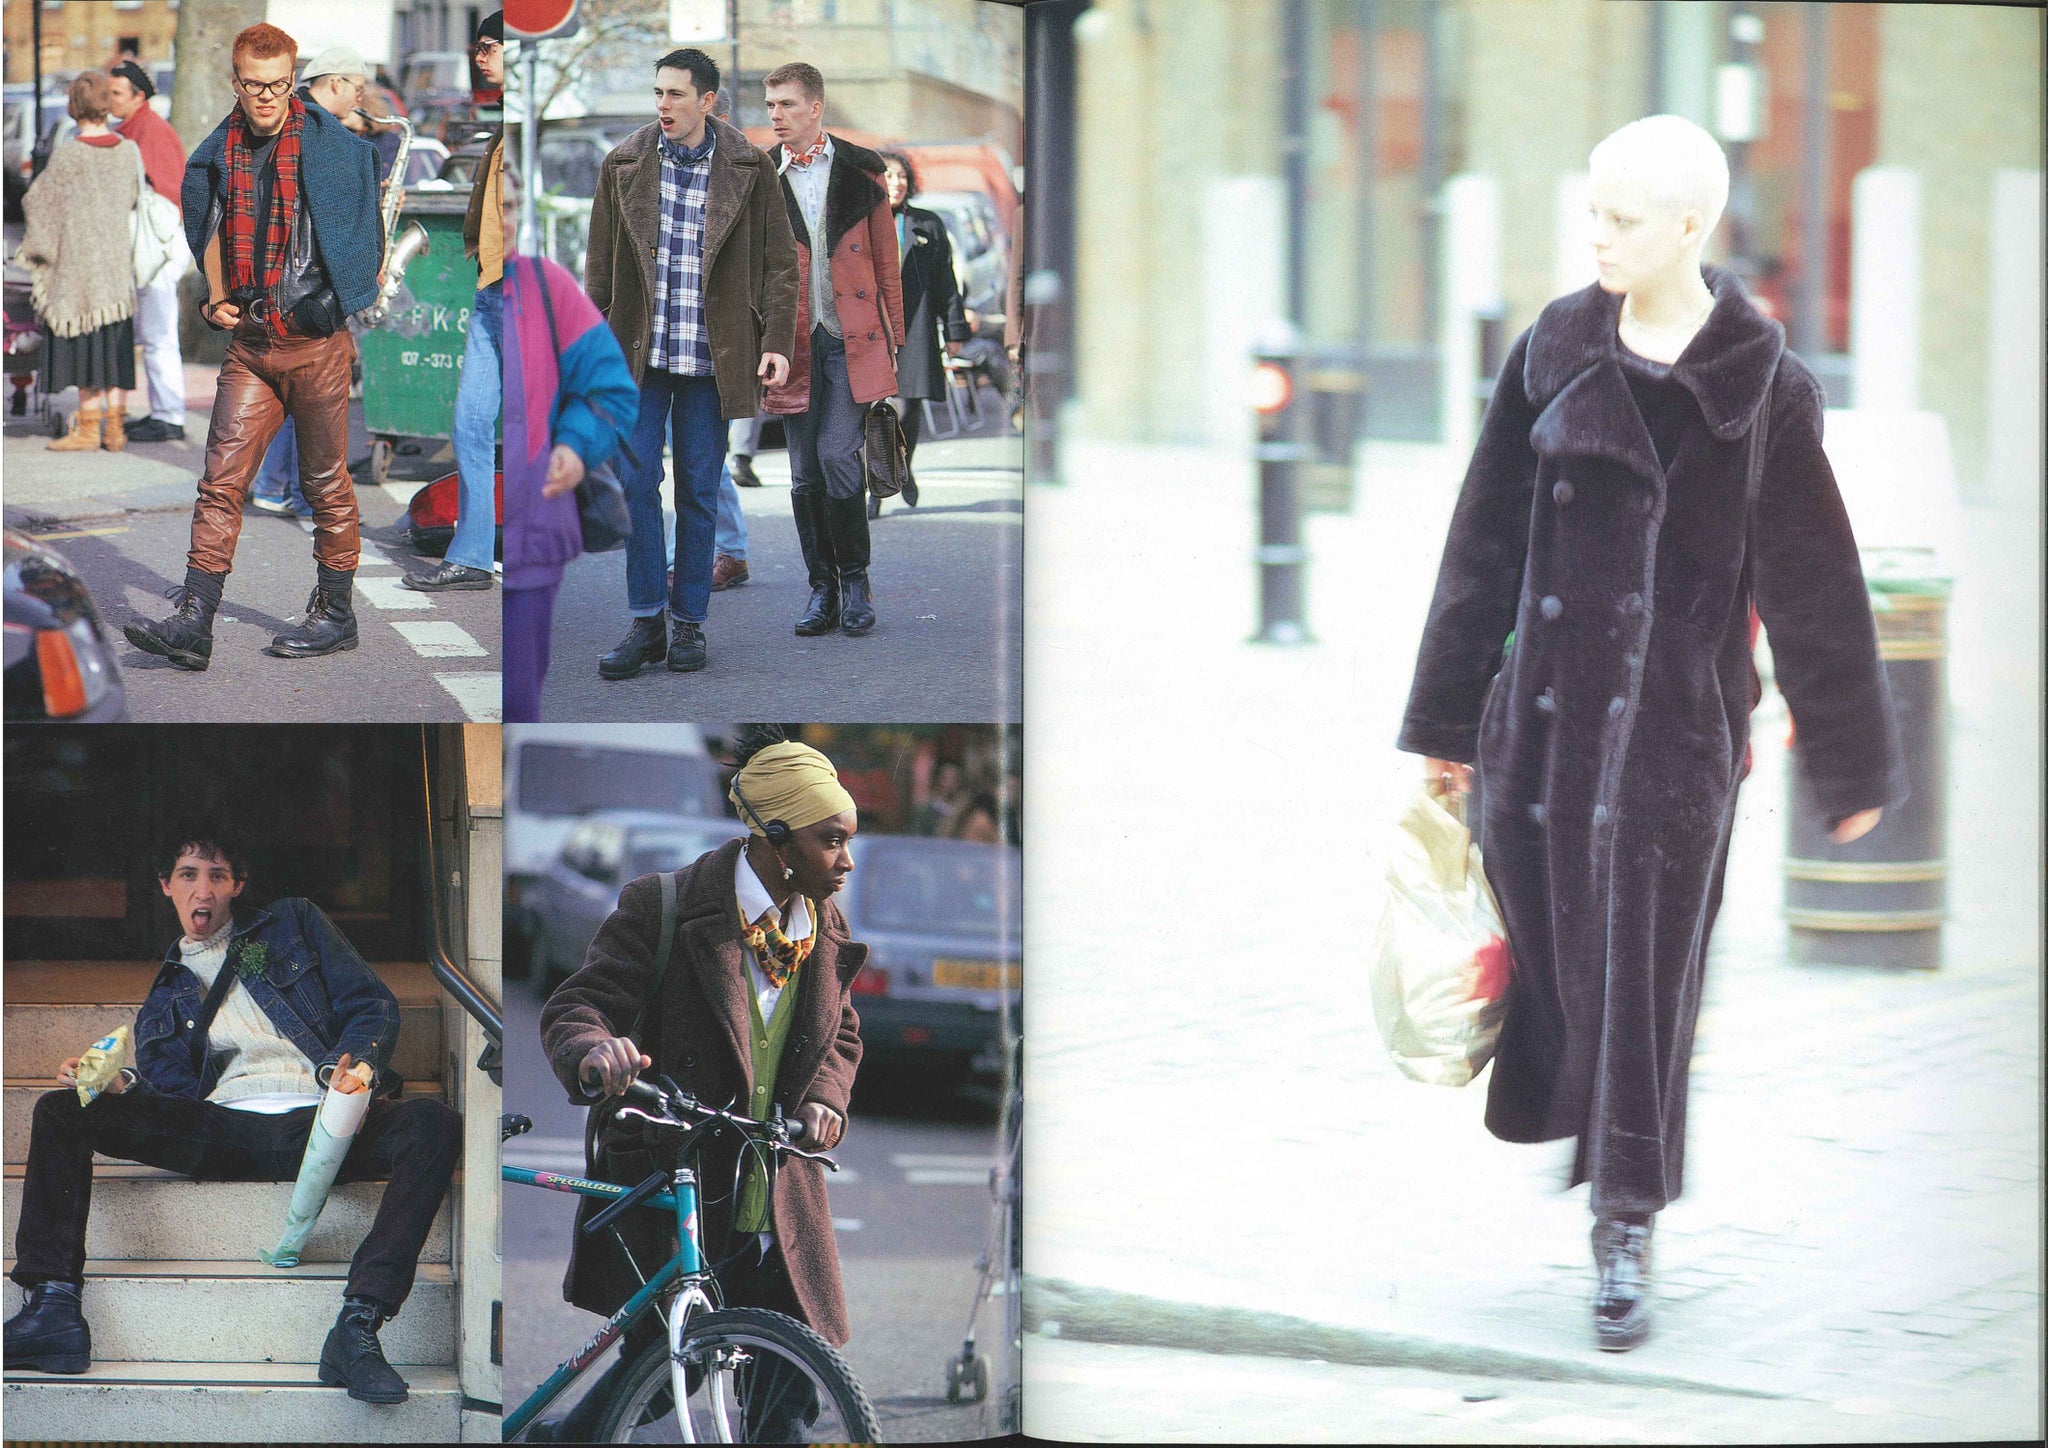 STREET magazine no. 60 / july 1994 / street fashion in london / Shoichi Aoki